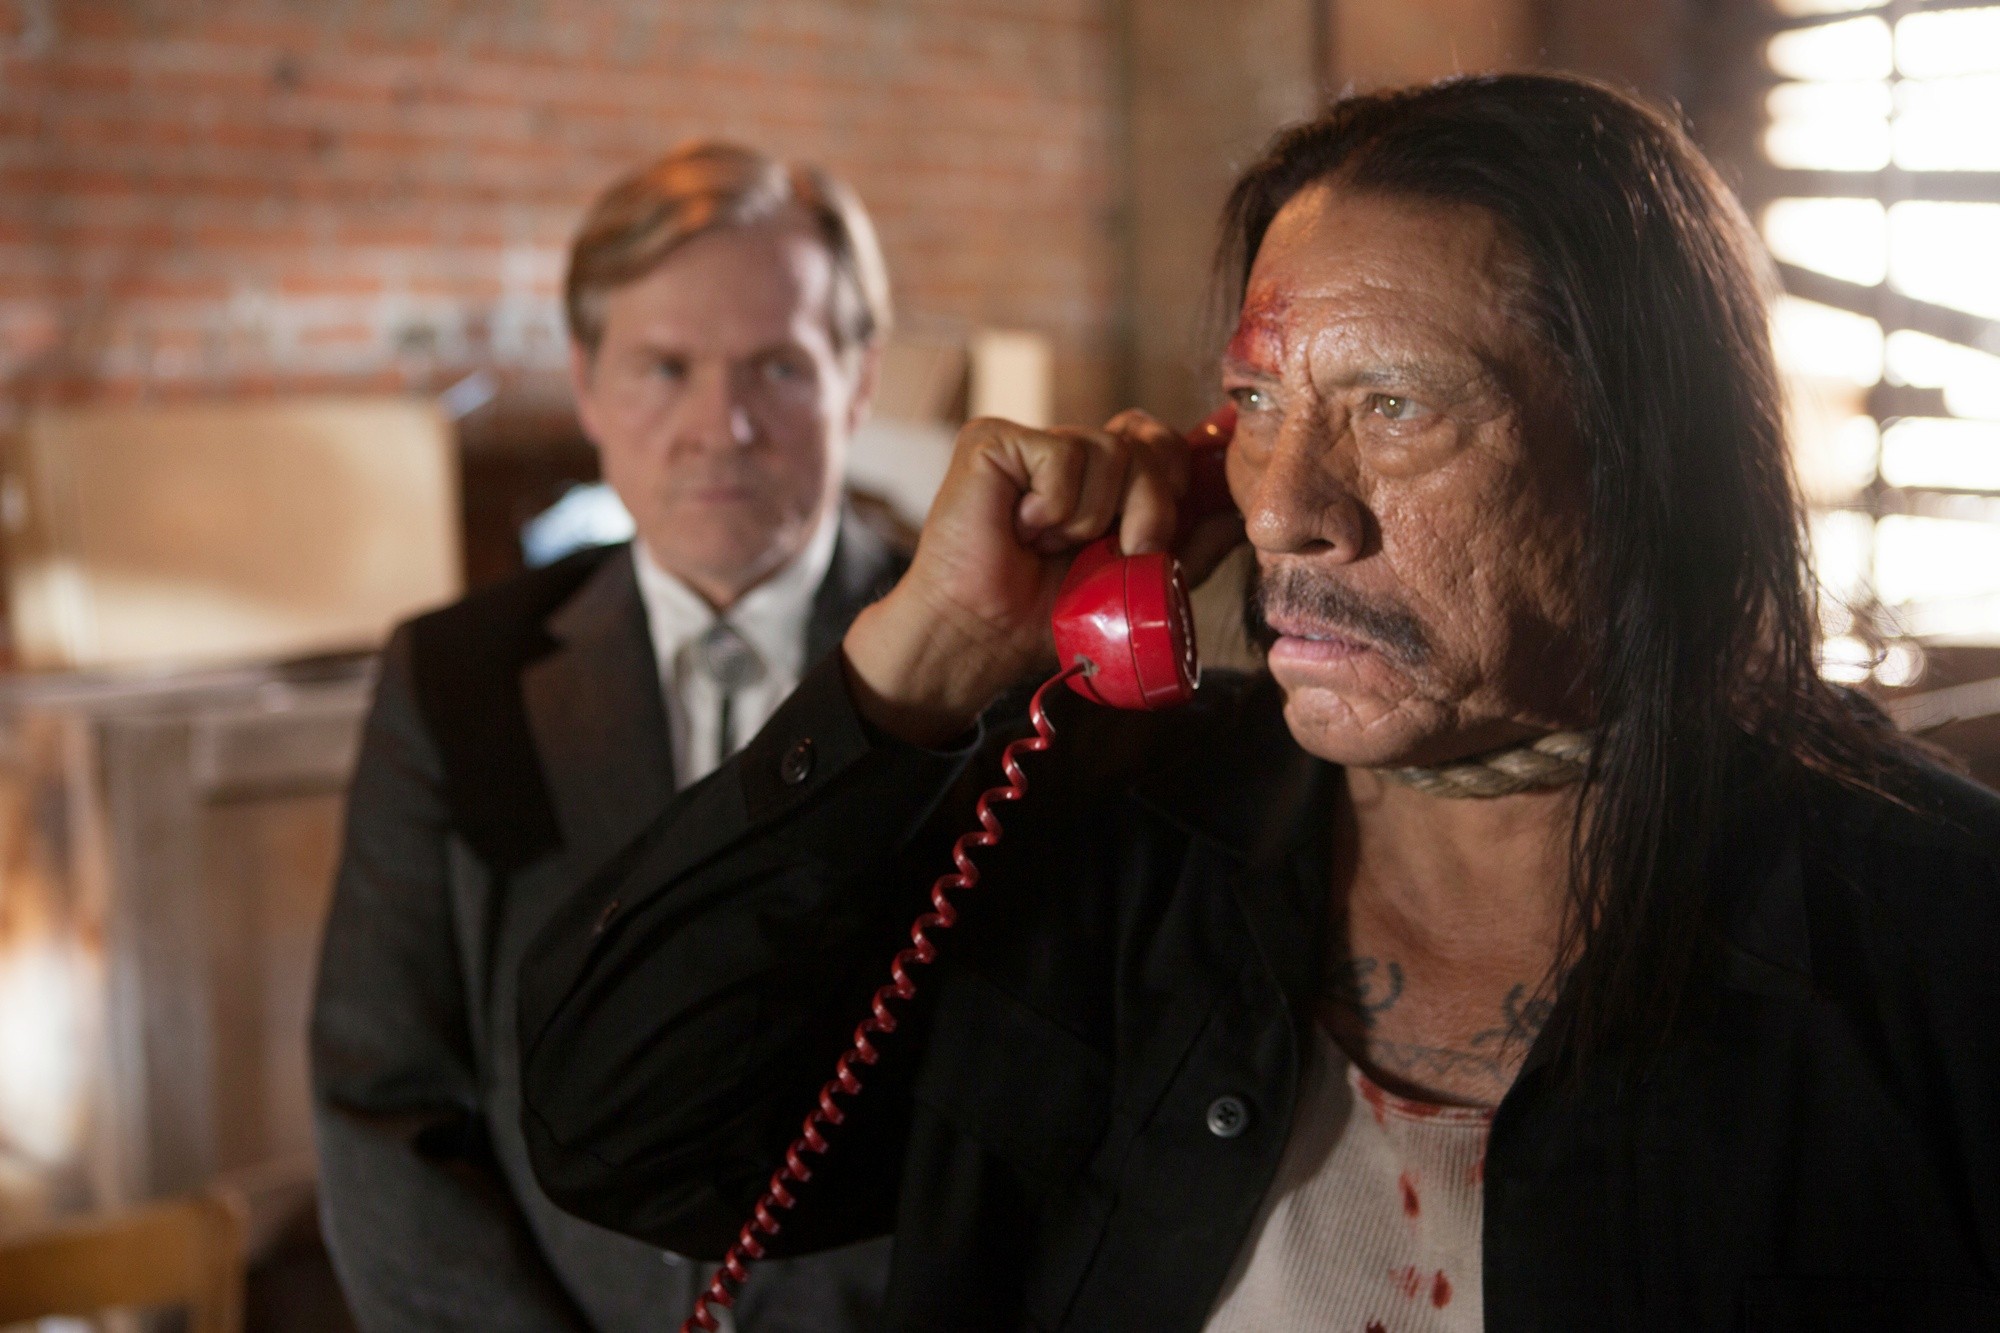 Danny Trejo stars as Machete Cortez in Open Road Films' Machete Kills (2013)